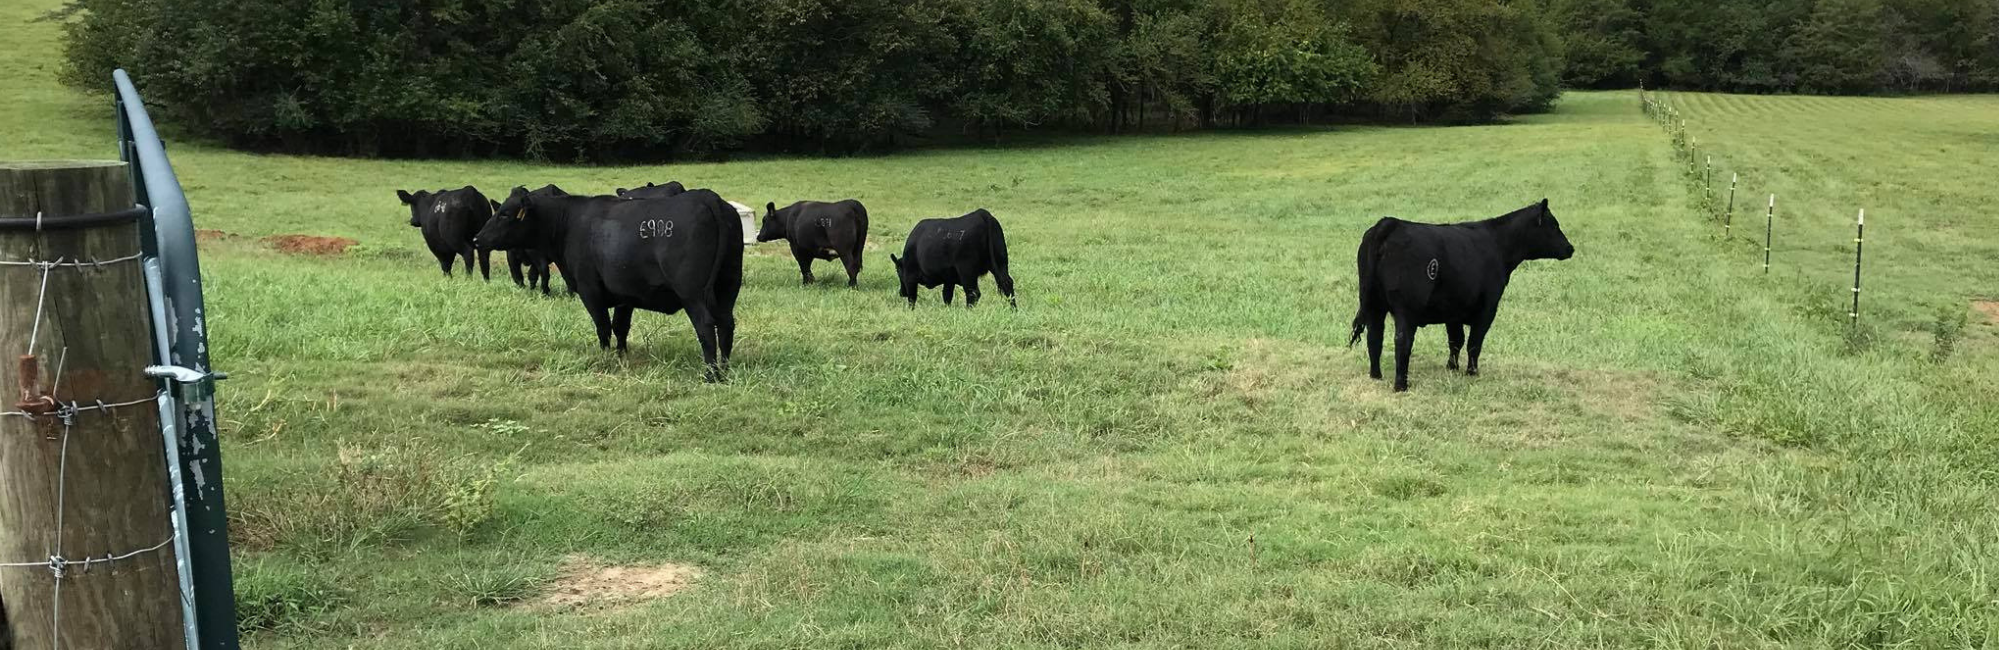 Black Angus Cattle Grazing 